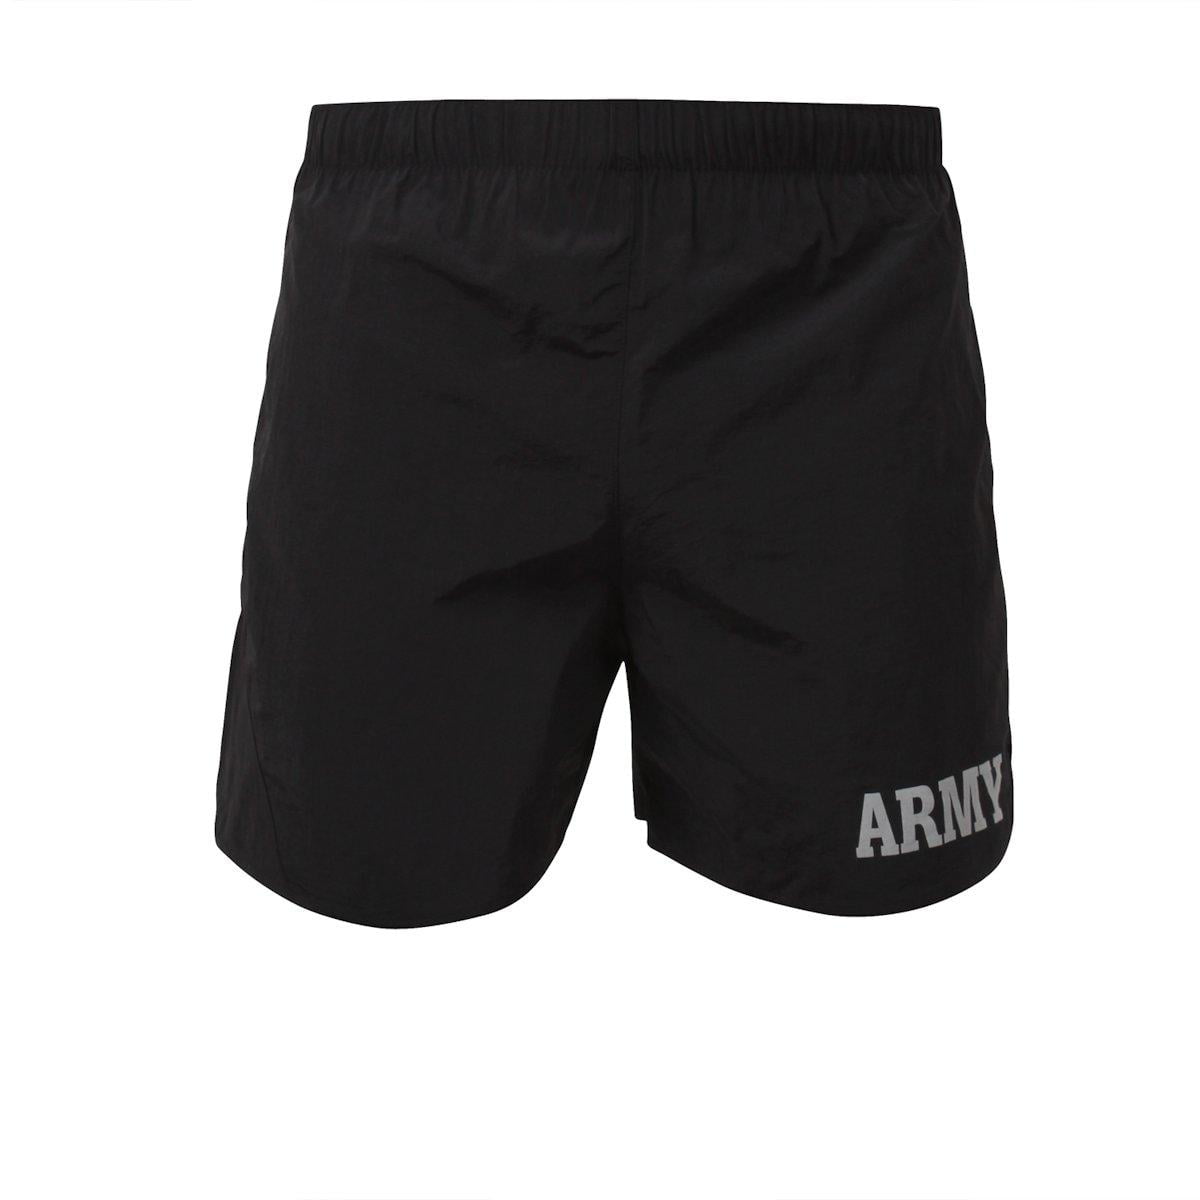 Army - Black Physical Training Shorts, Mens Size M - Walmart.com ...